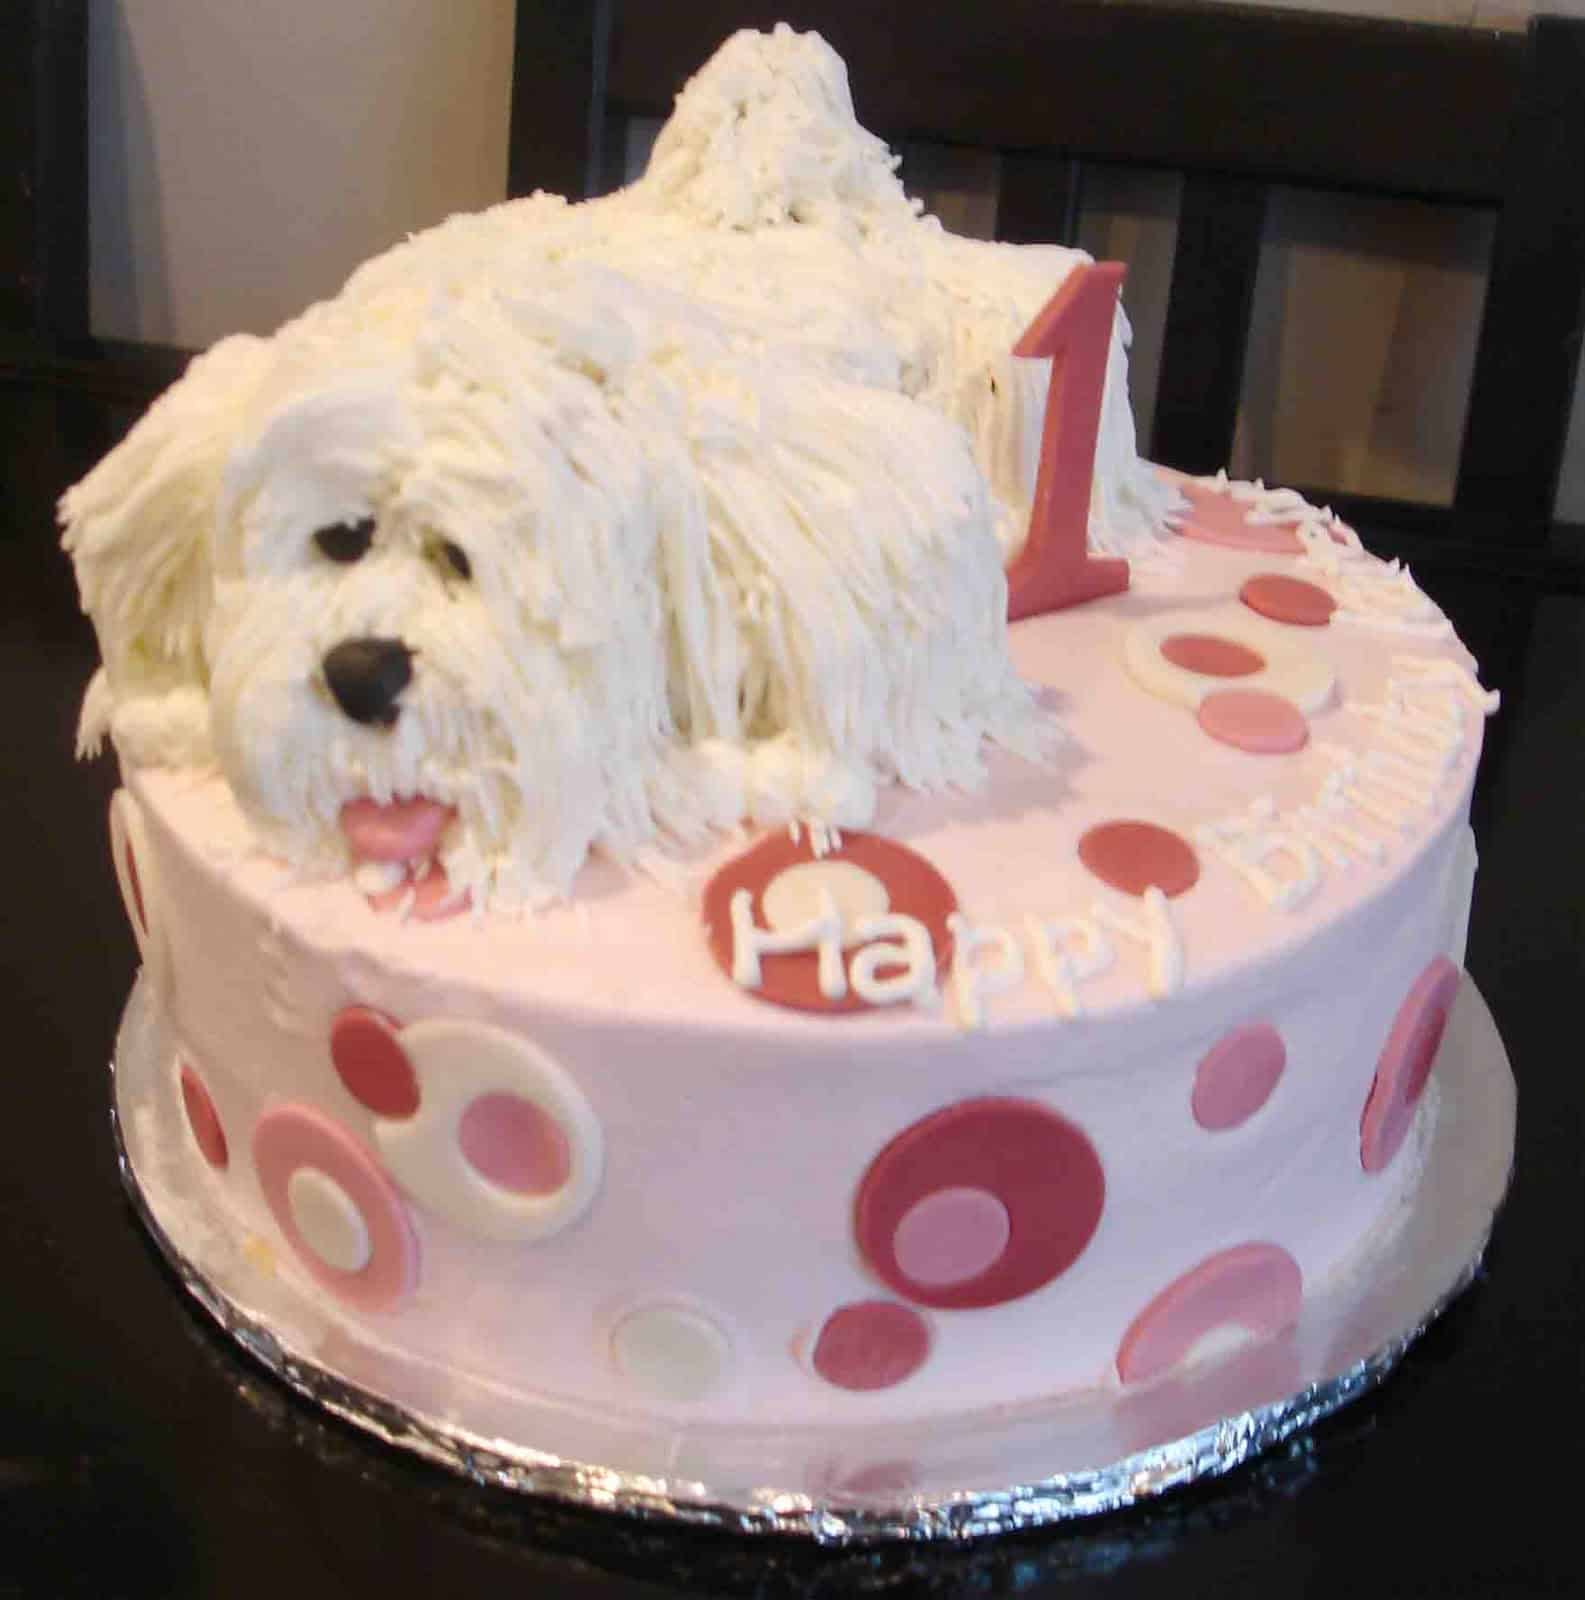 Serendipity Cake Design: Puppy cake